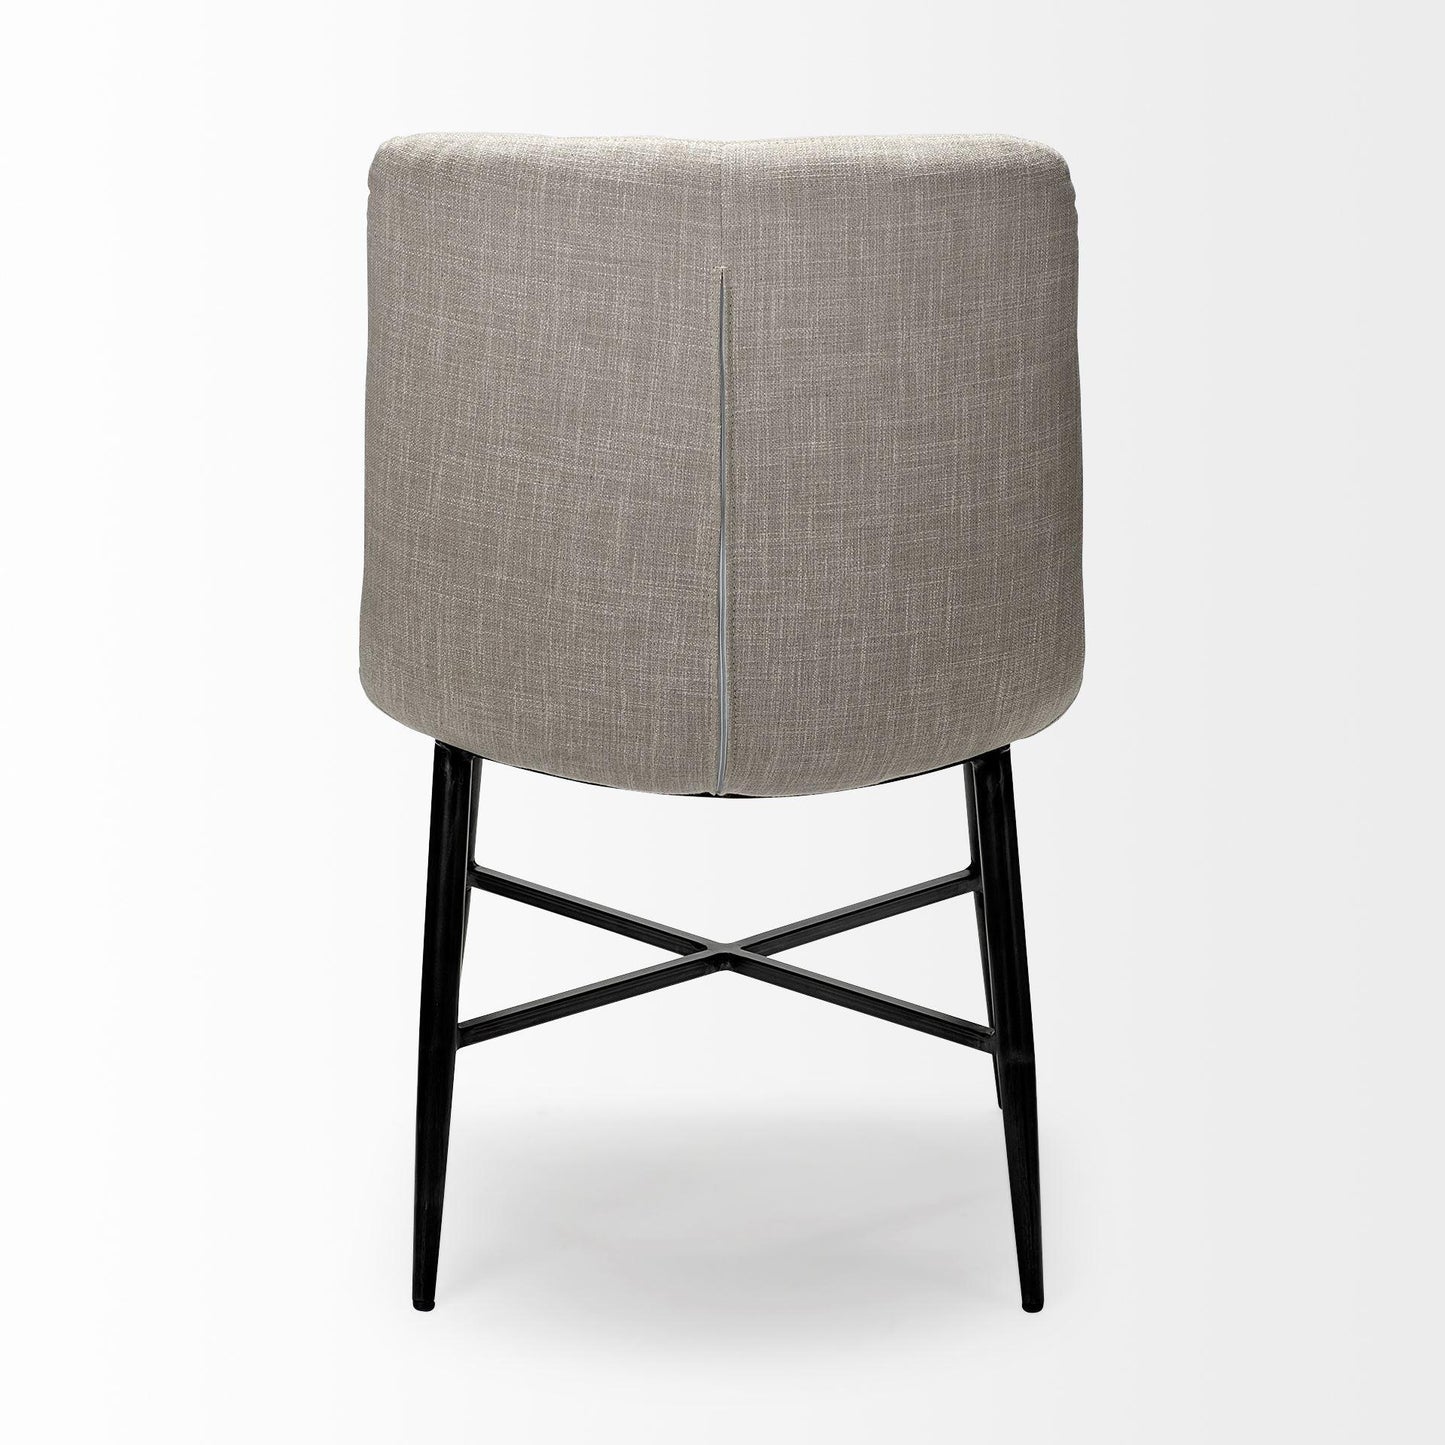 Crossman Table - 4 Chairs